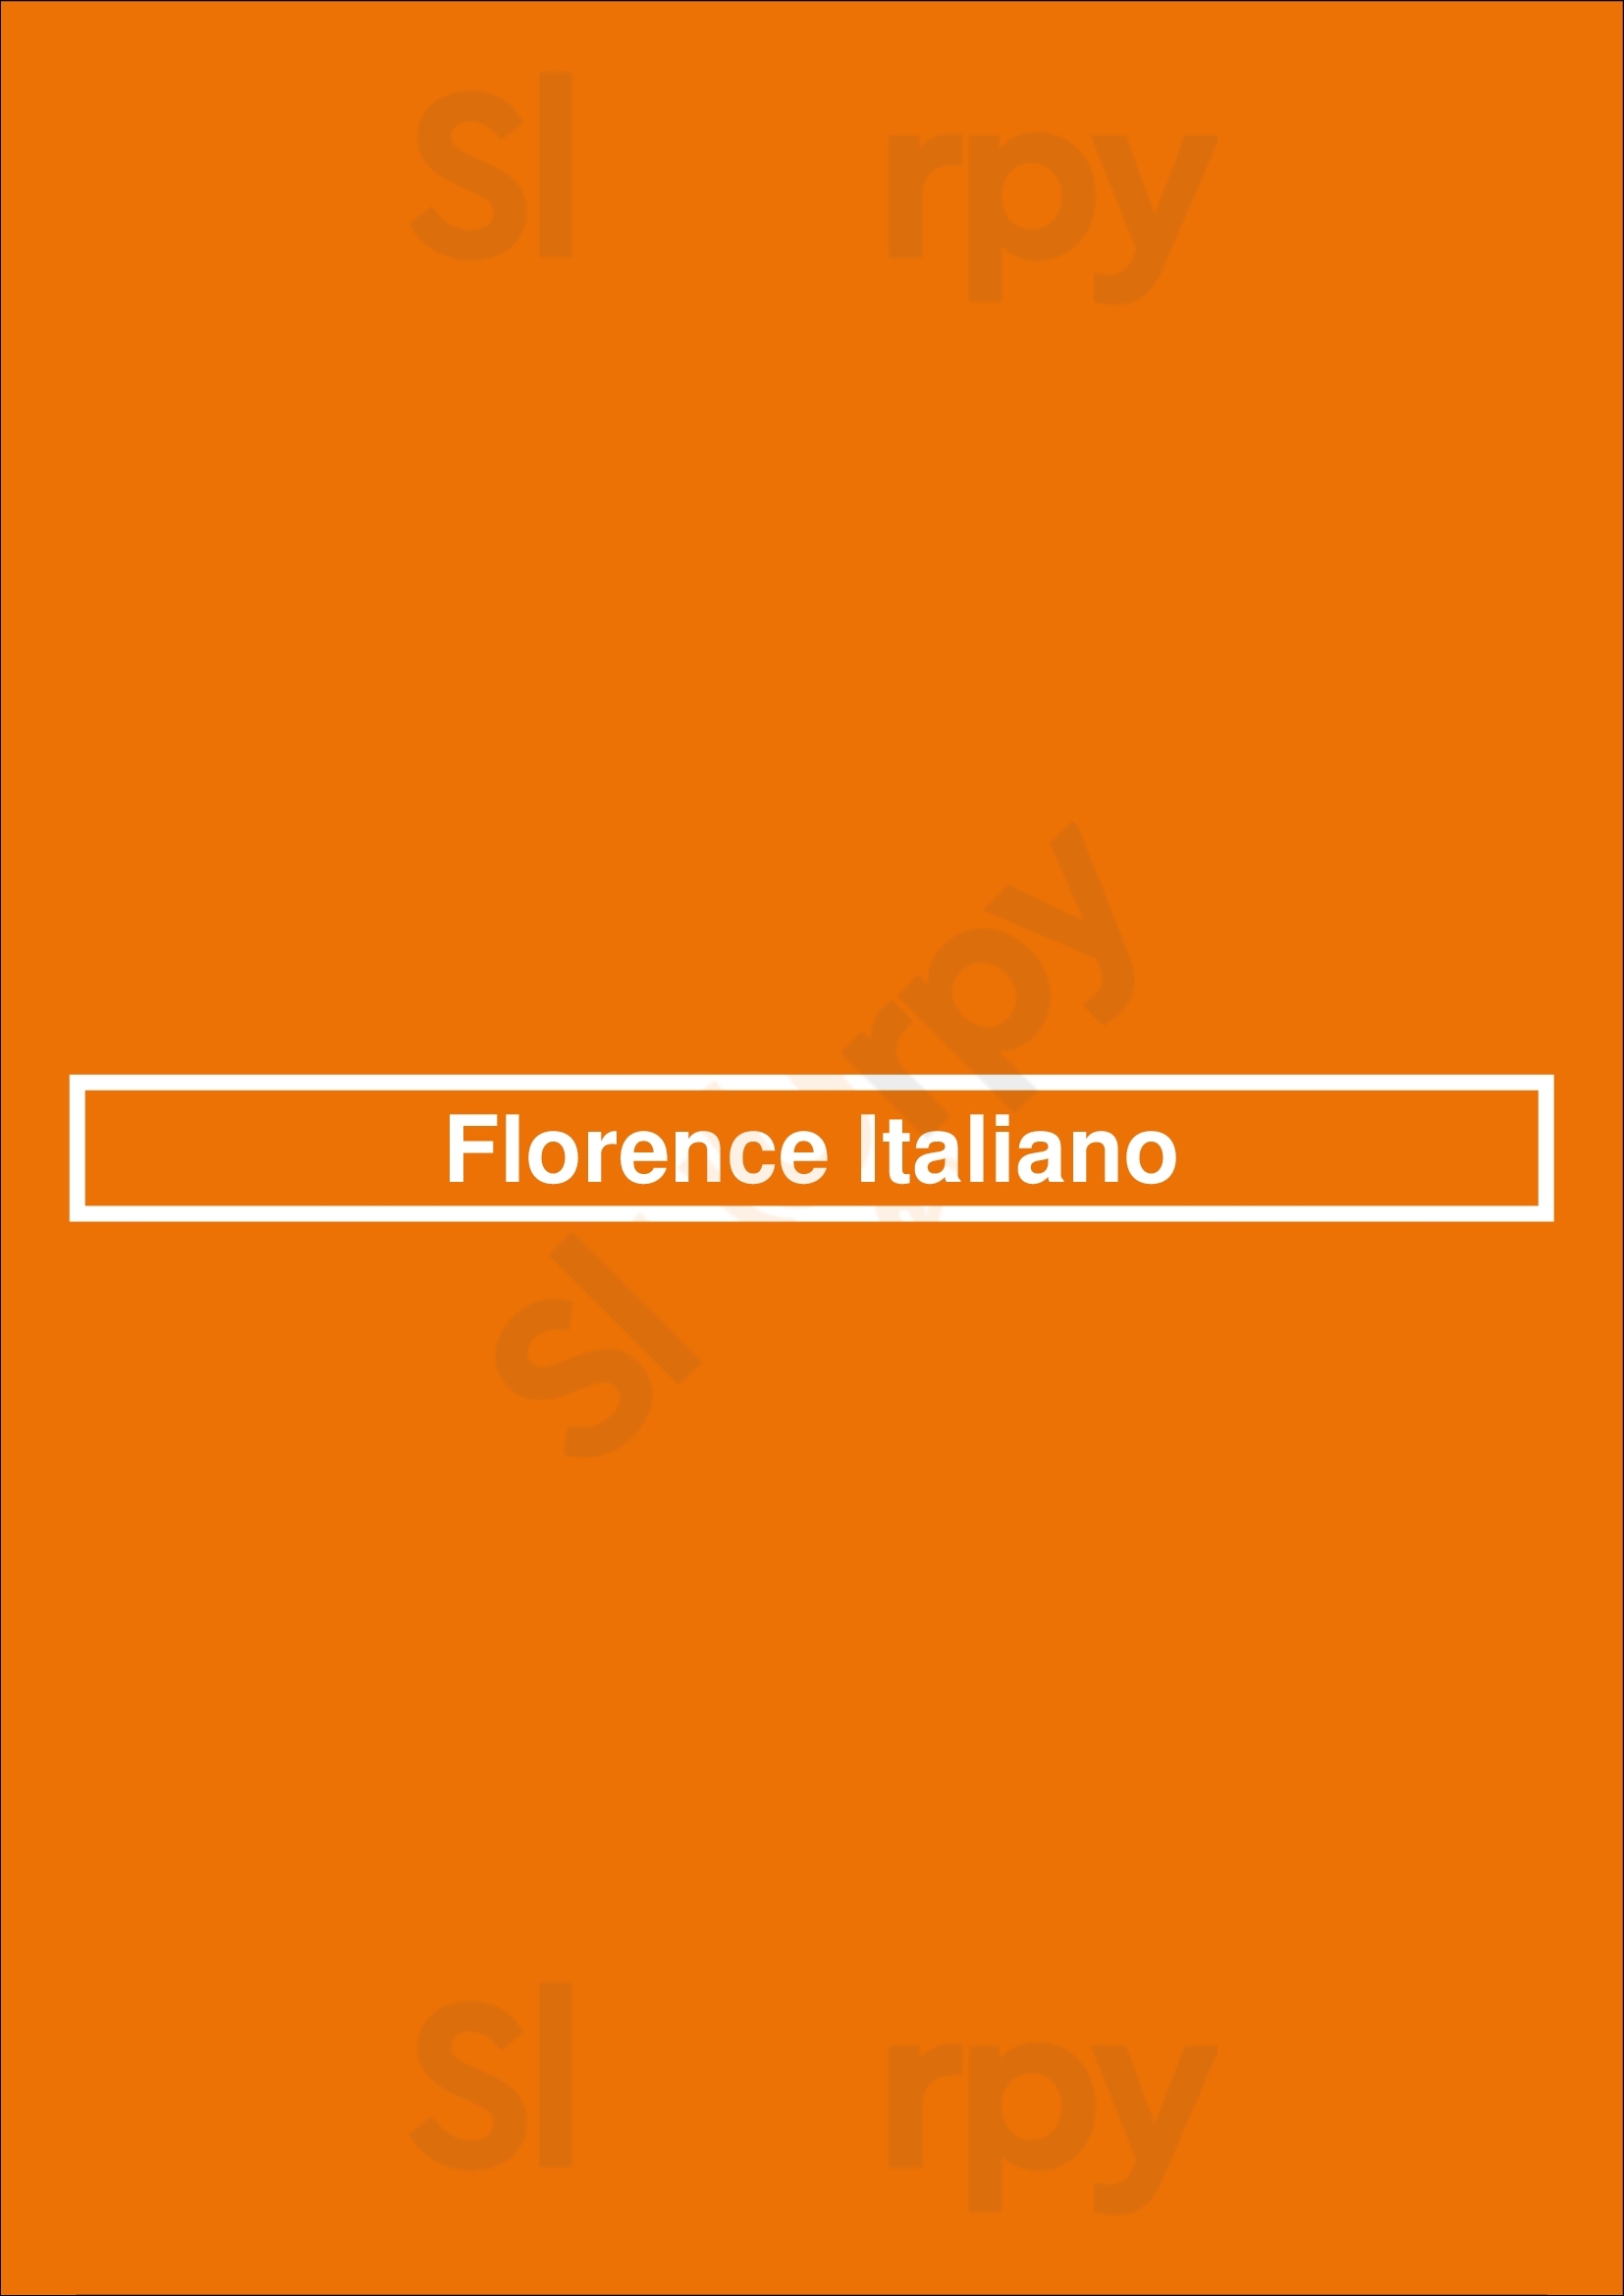 Florence Italiano Lisboa Menu - 1